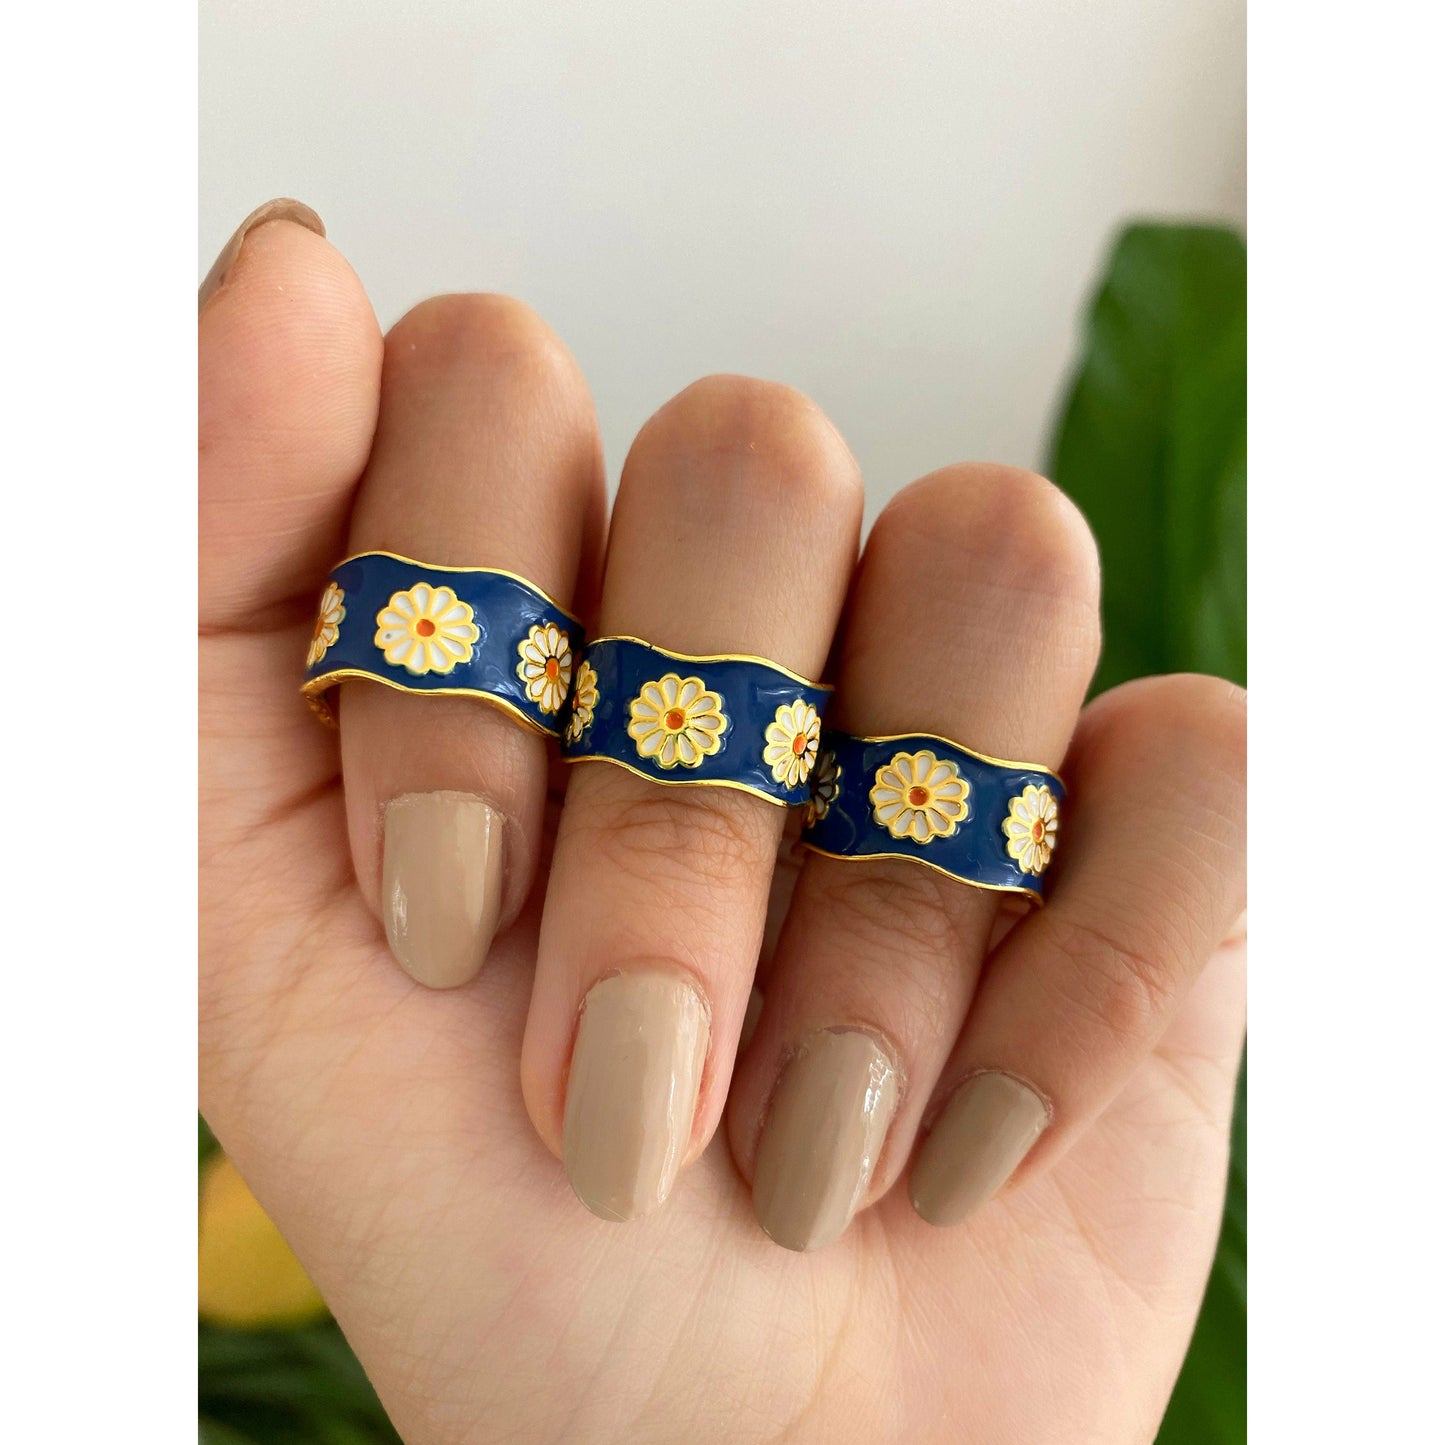 Yin Yang Chunky Ring • Happy Smiley Face Ring Daisy Jewelry